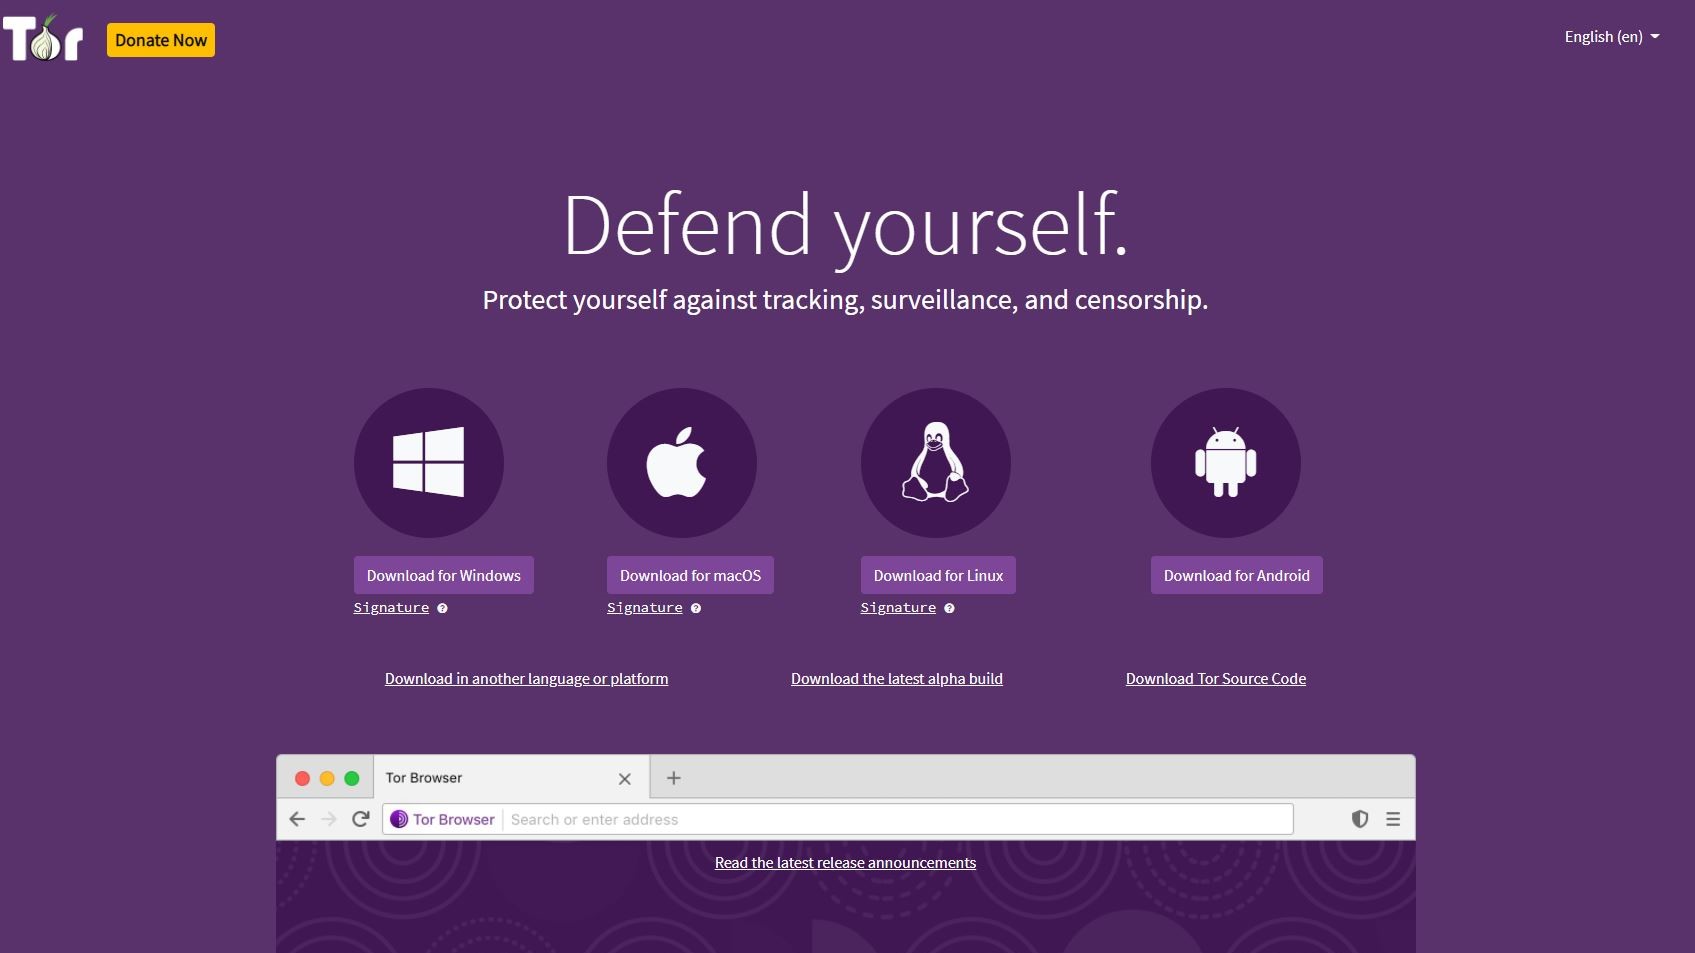 Tor Browser 